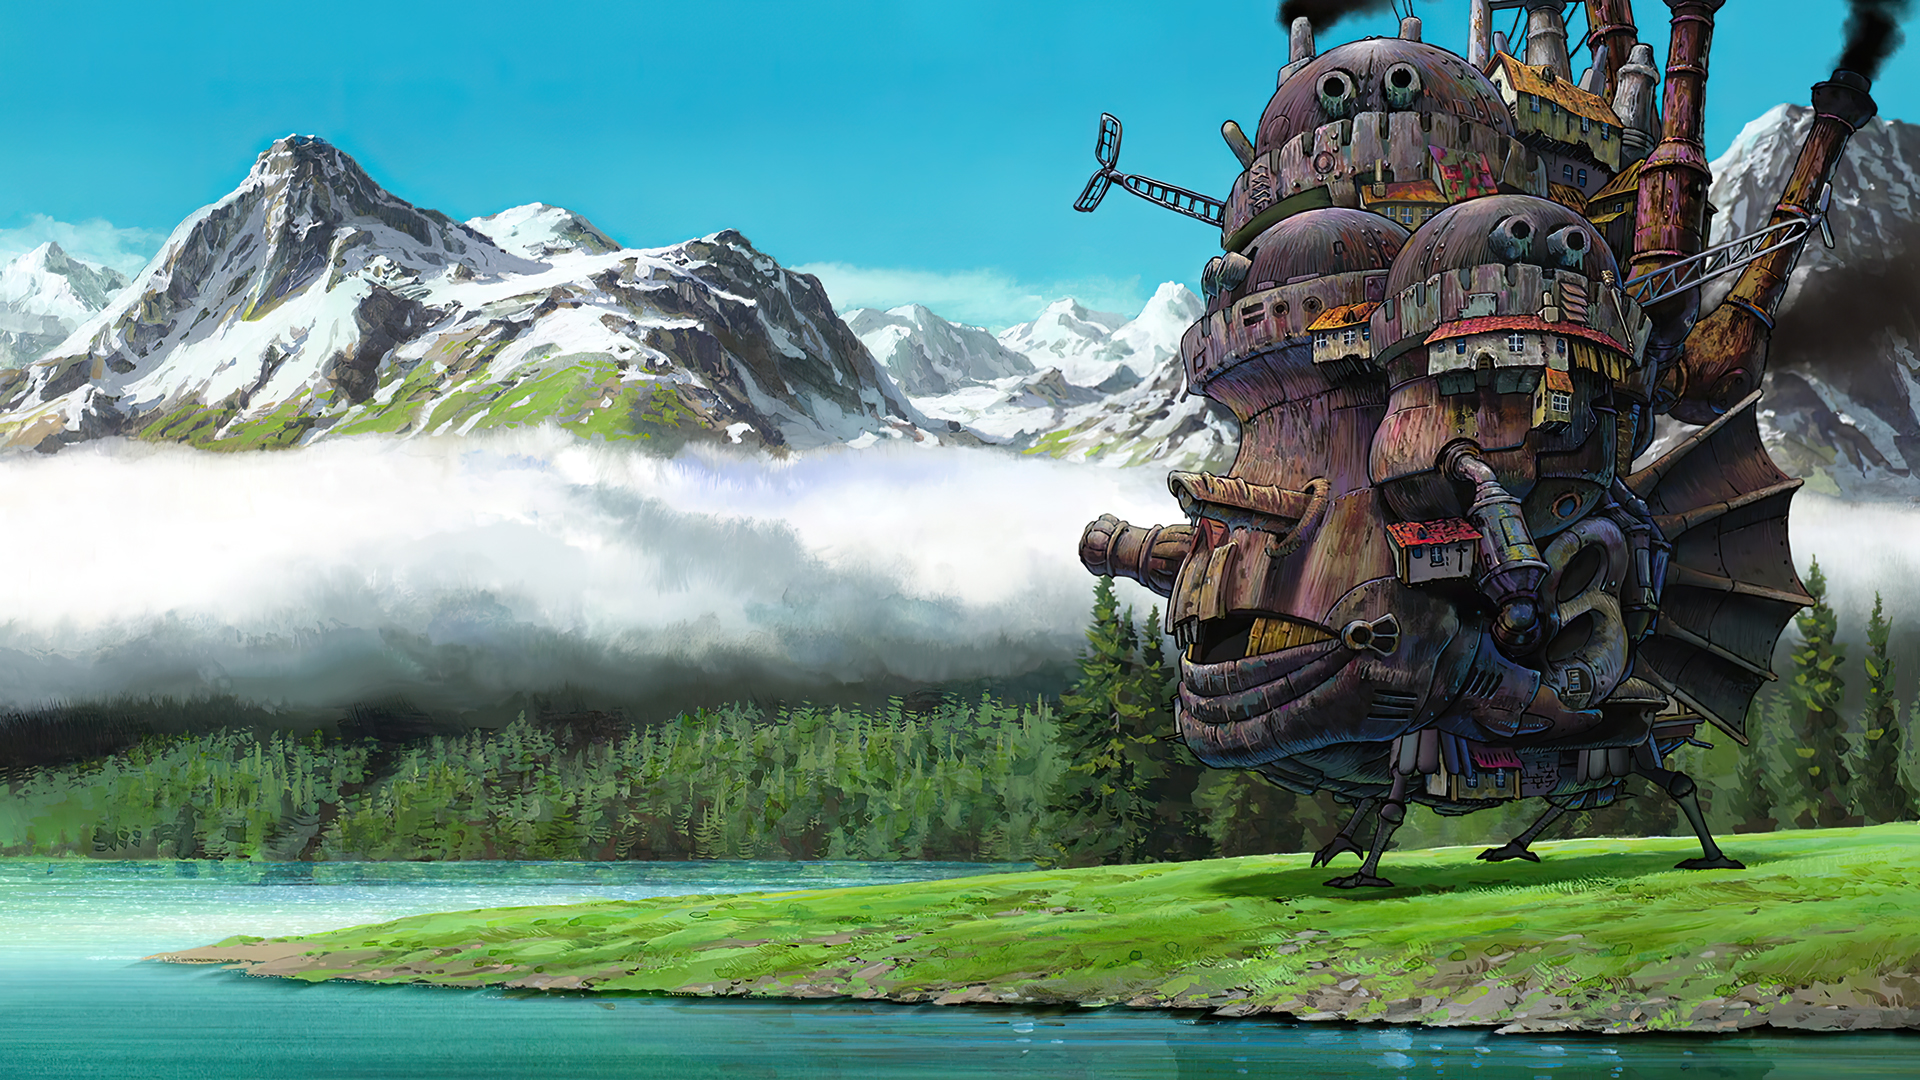 Howls Moving Castle Animated Movies Anime Animation Film Stills Studio Ghibli Hayao Miyazaki Mountai 1920x1080